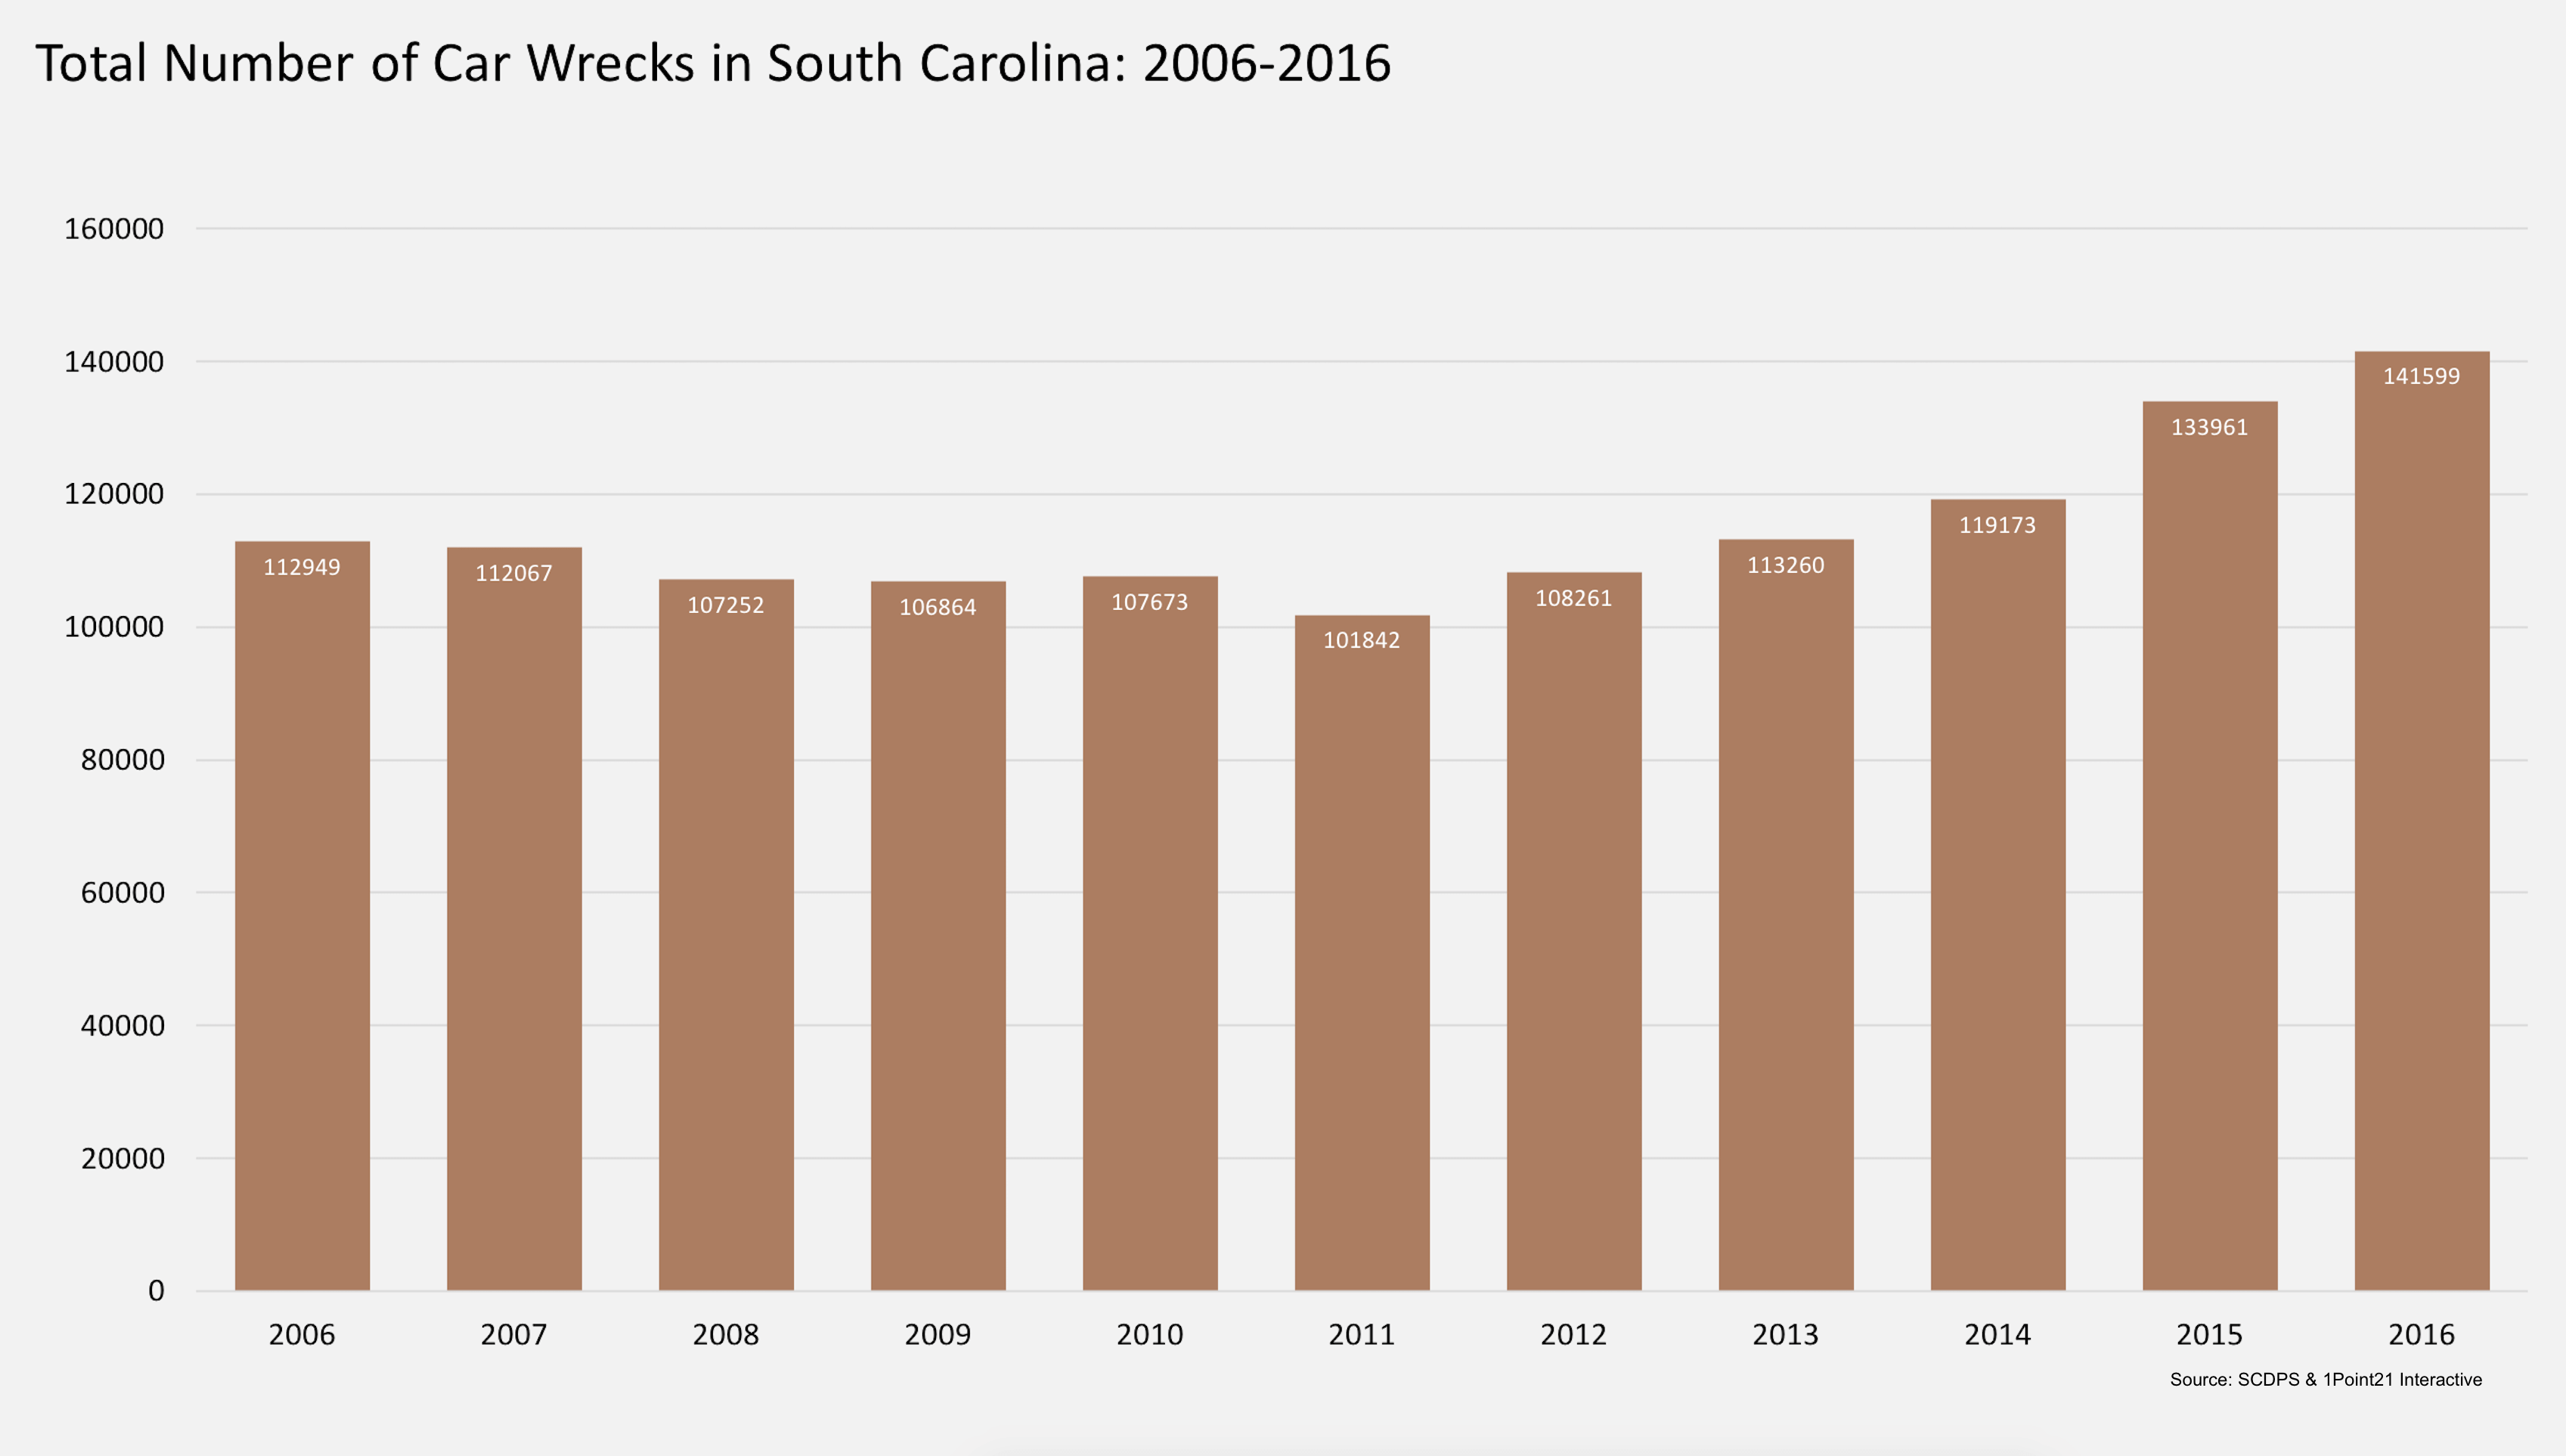 South Carolina Car Accident Statistics from 2006-2016